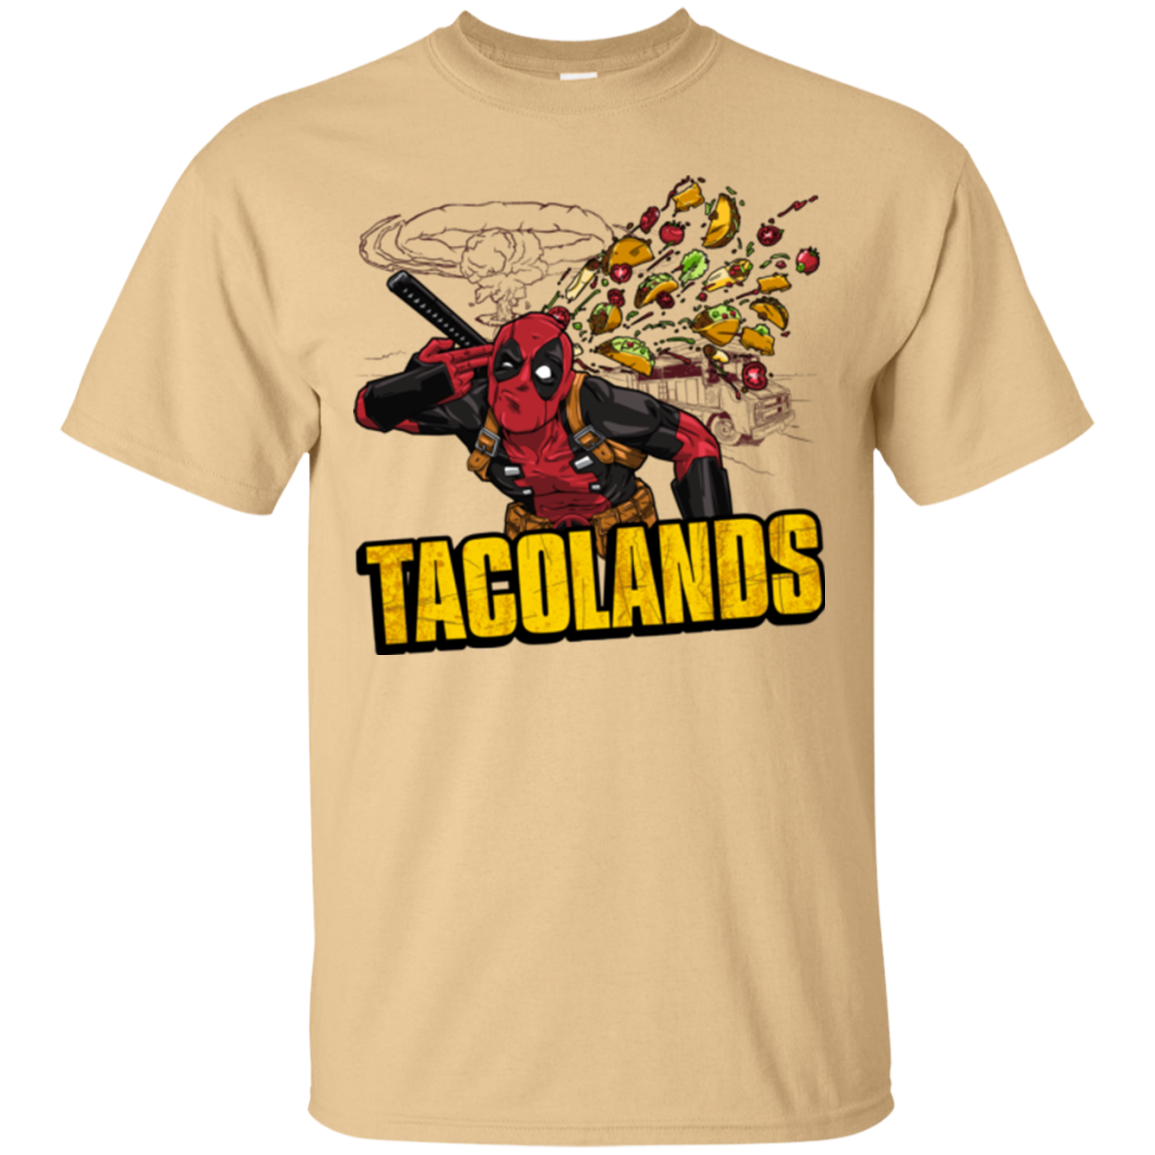 Tacolands T-Shirt